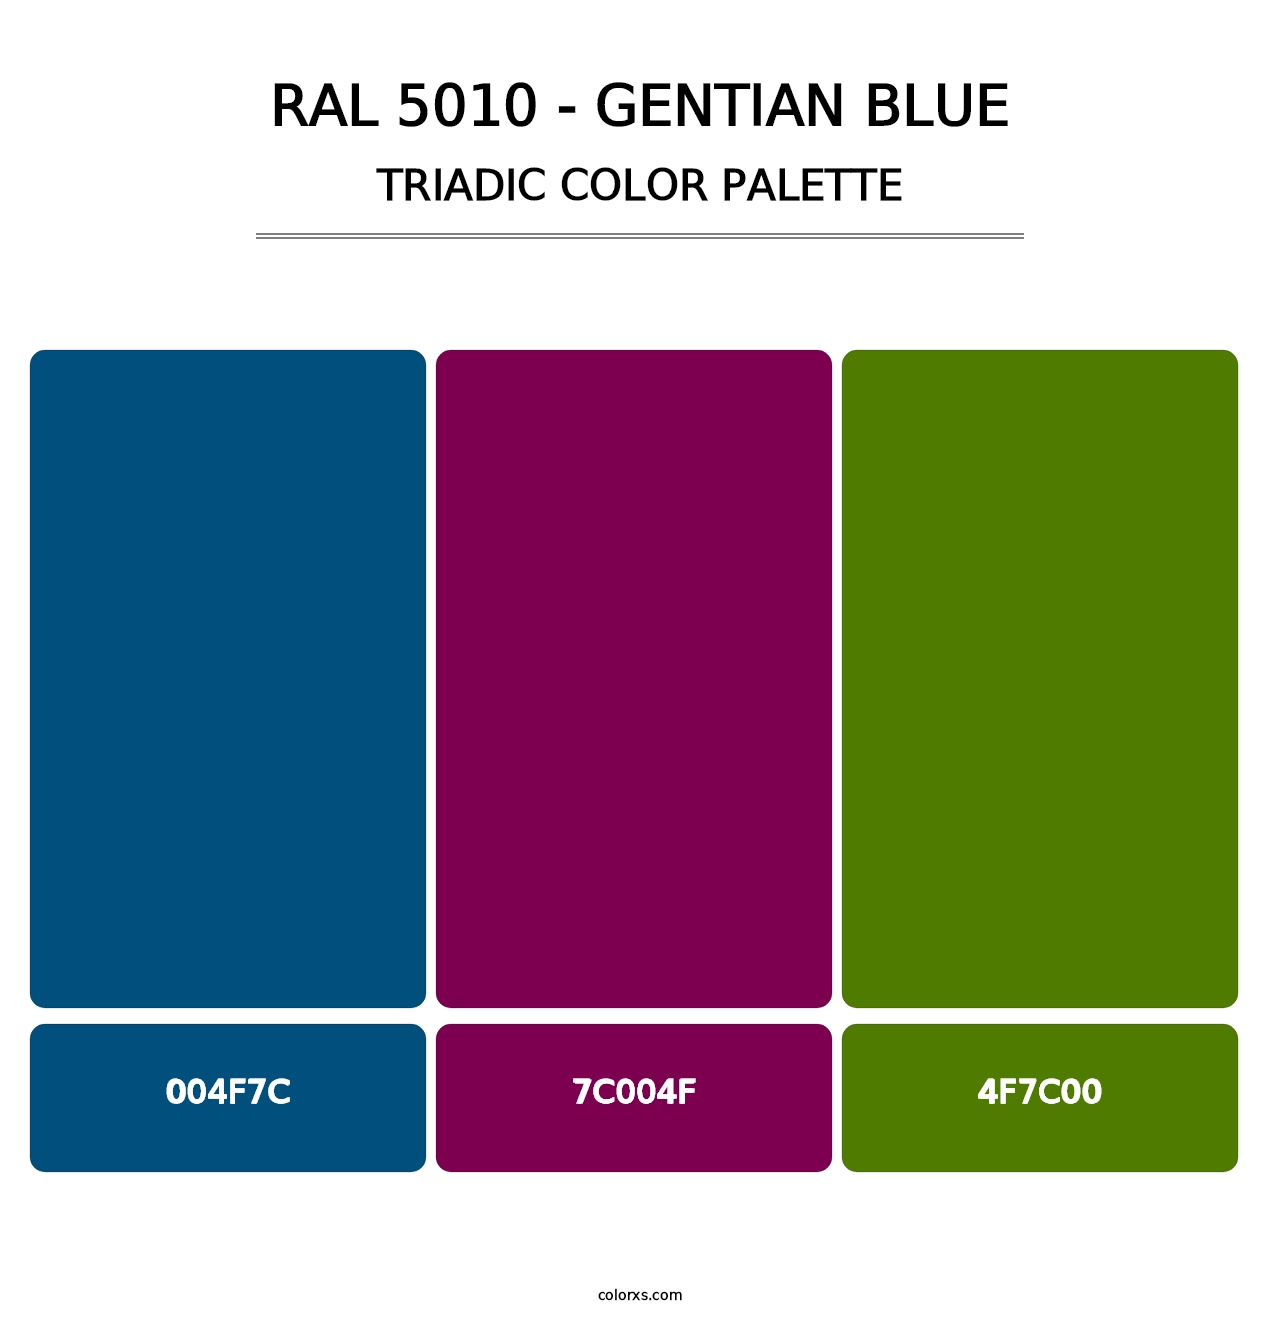 RAL 5010 - Gentian Blue - Triadic Color Palette